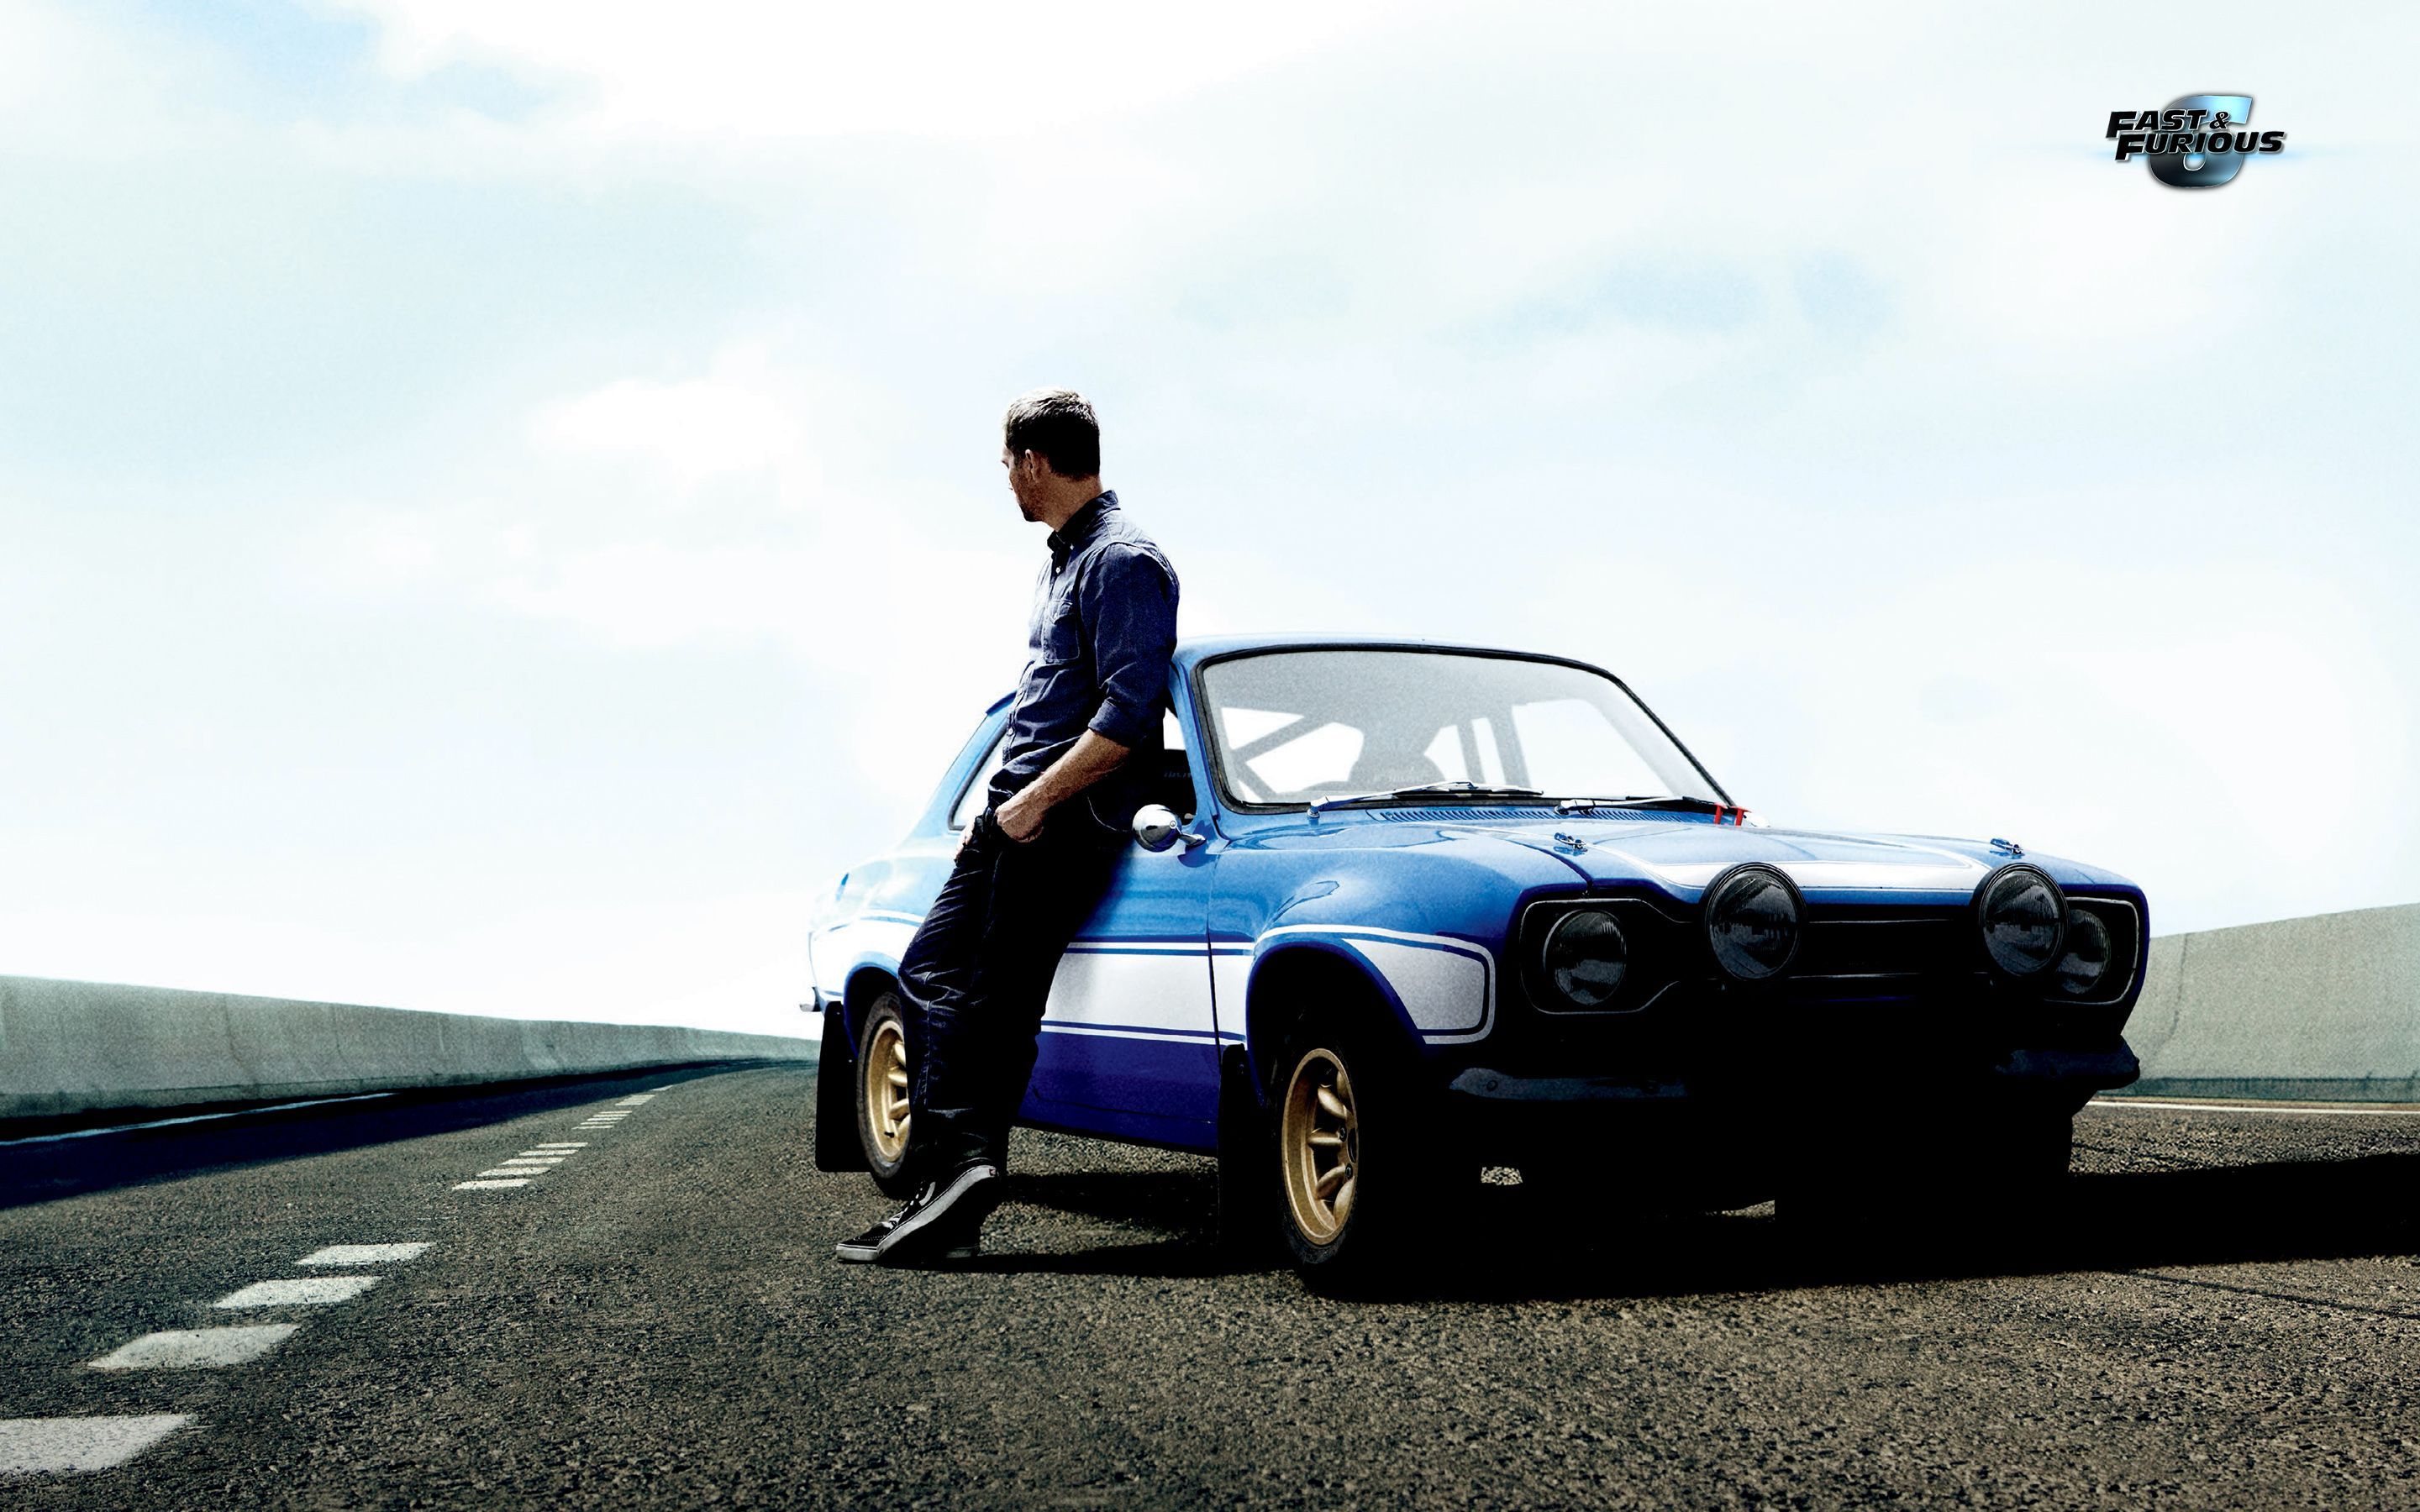 Paul Walker in Fast & Furious 6 Wallpapers | HD Wallpapers